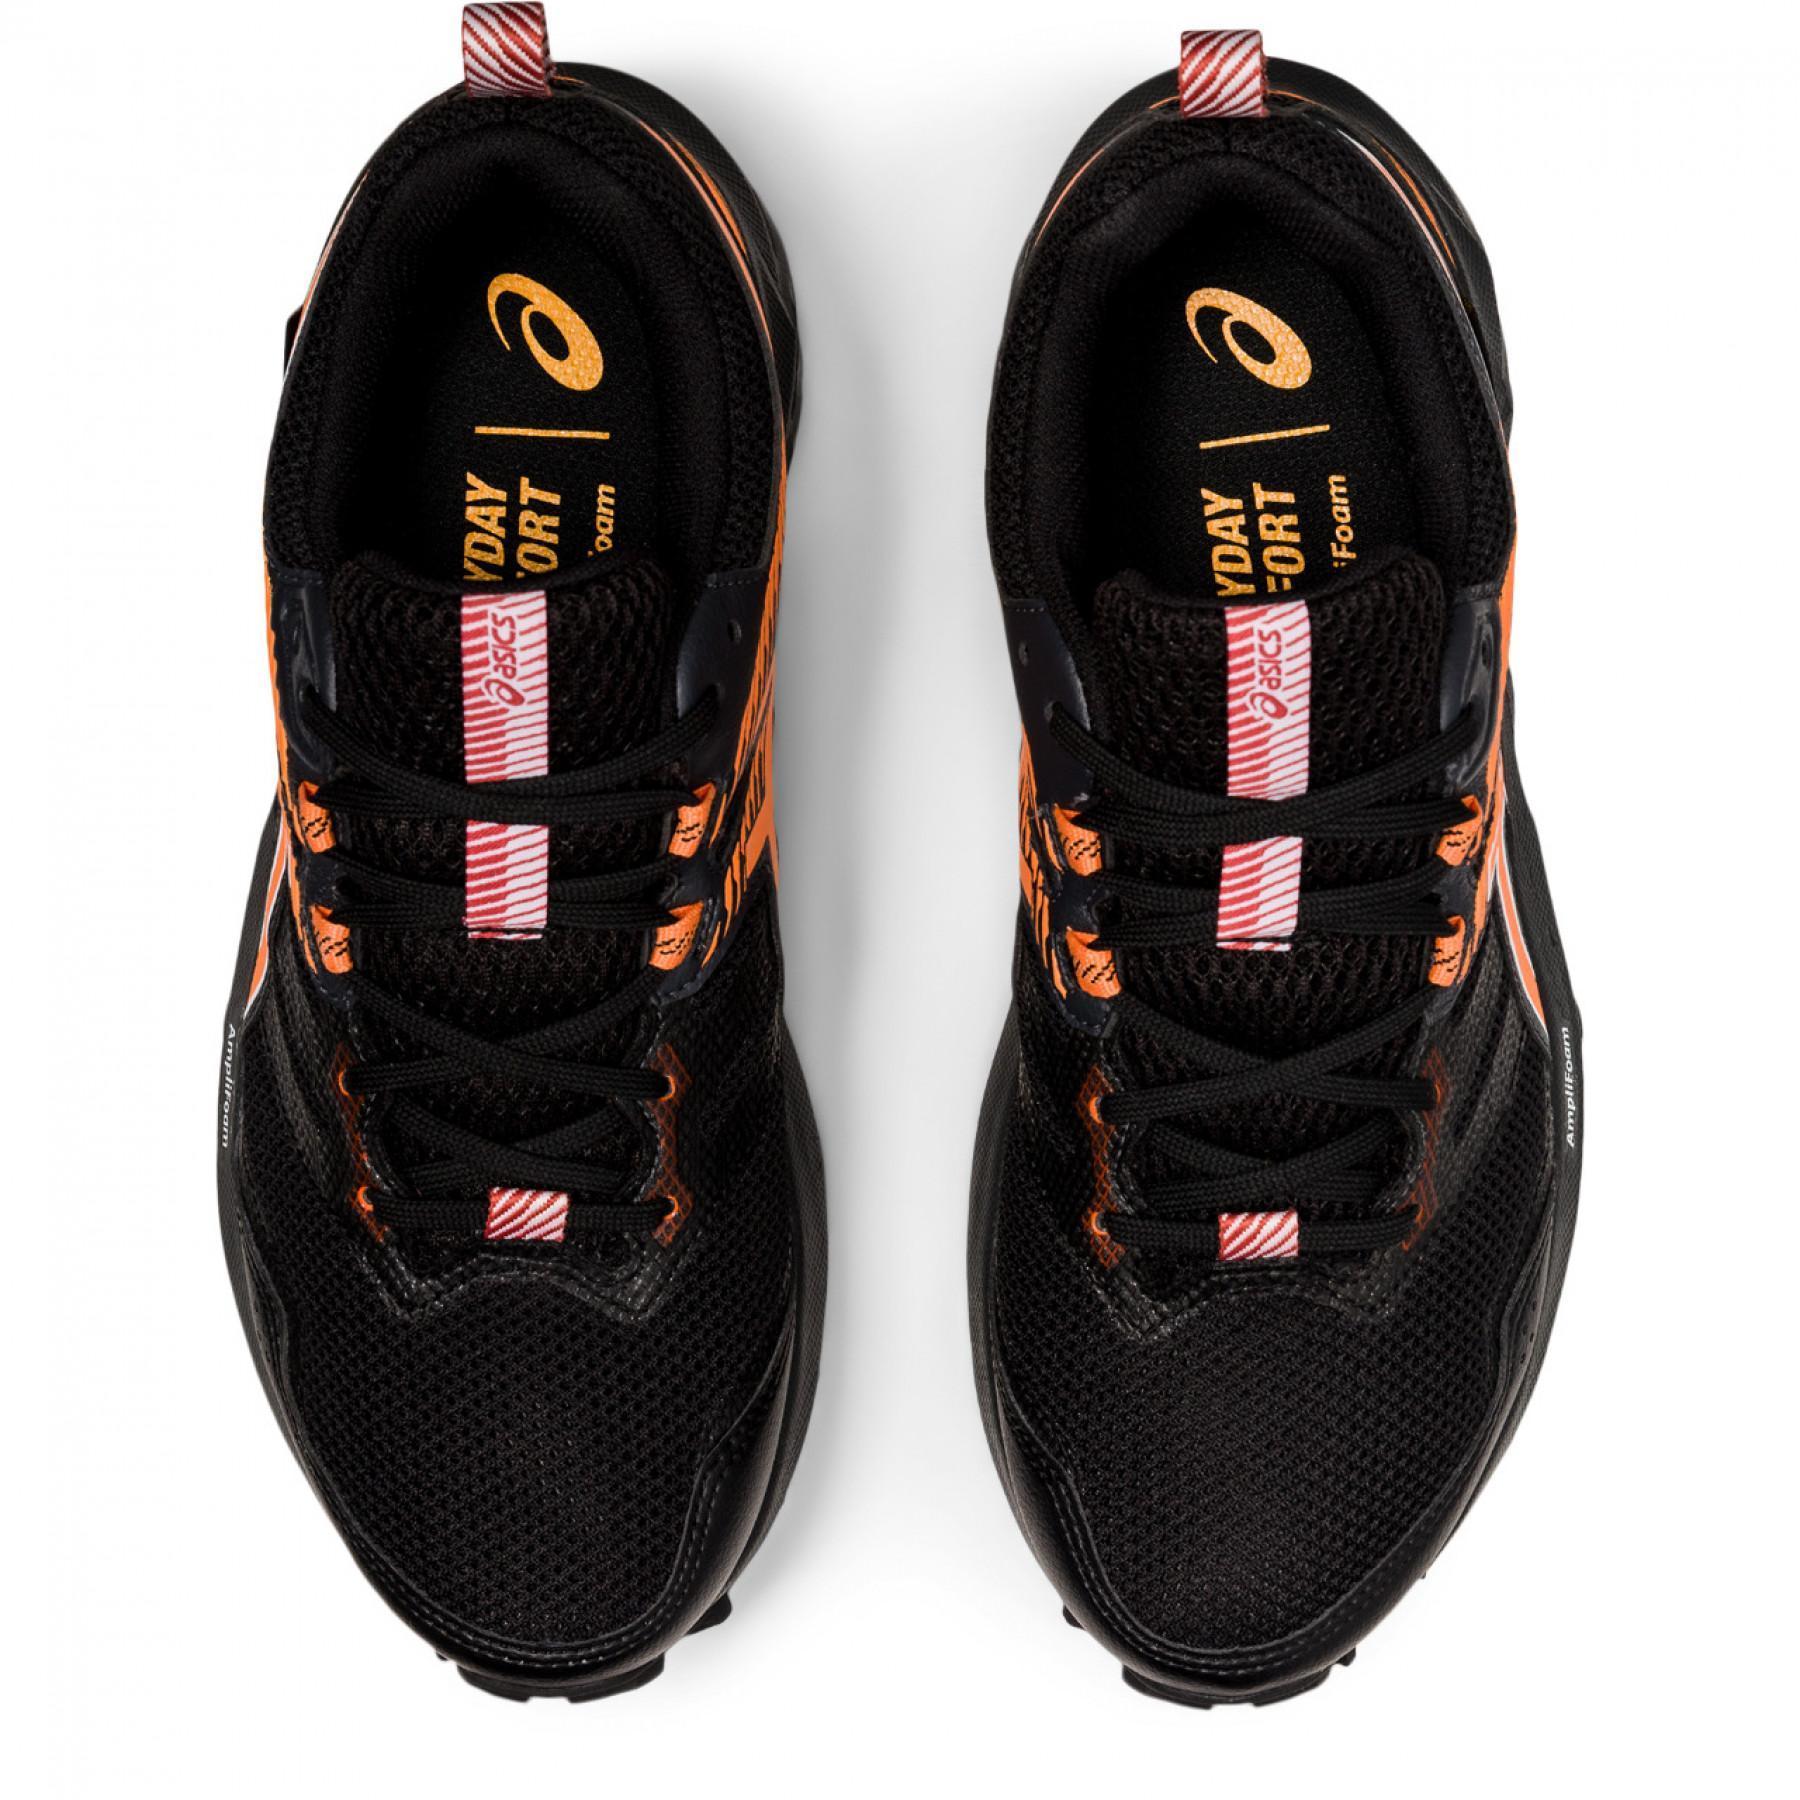 Women's trail shoes Asics Gel-Sonoma 6 G-Tx GTX